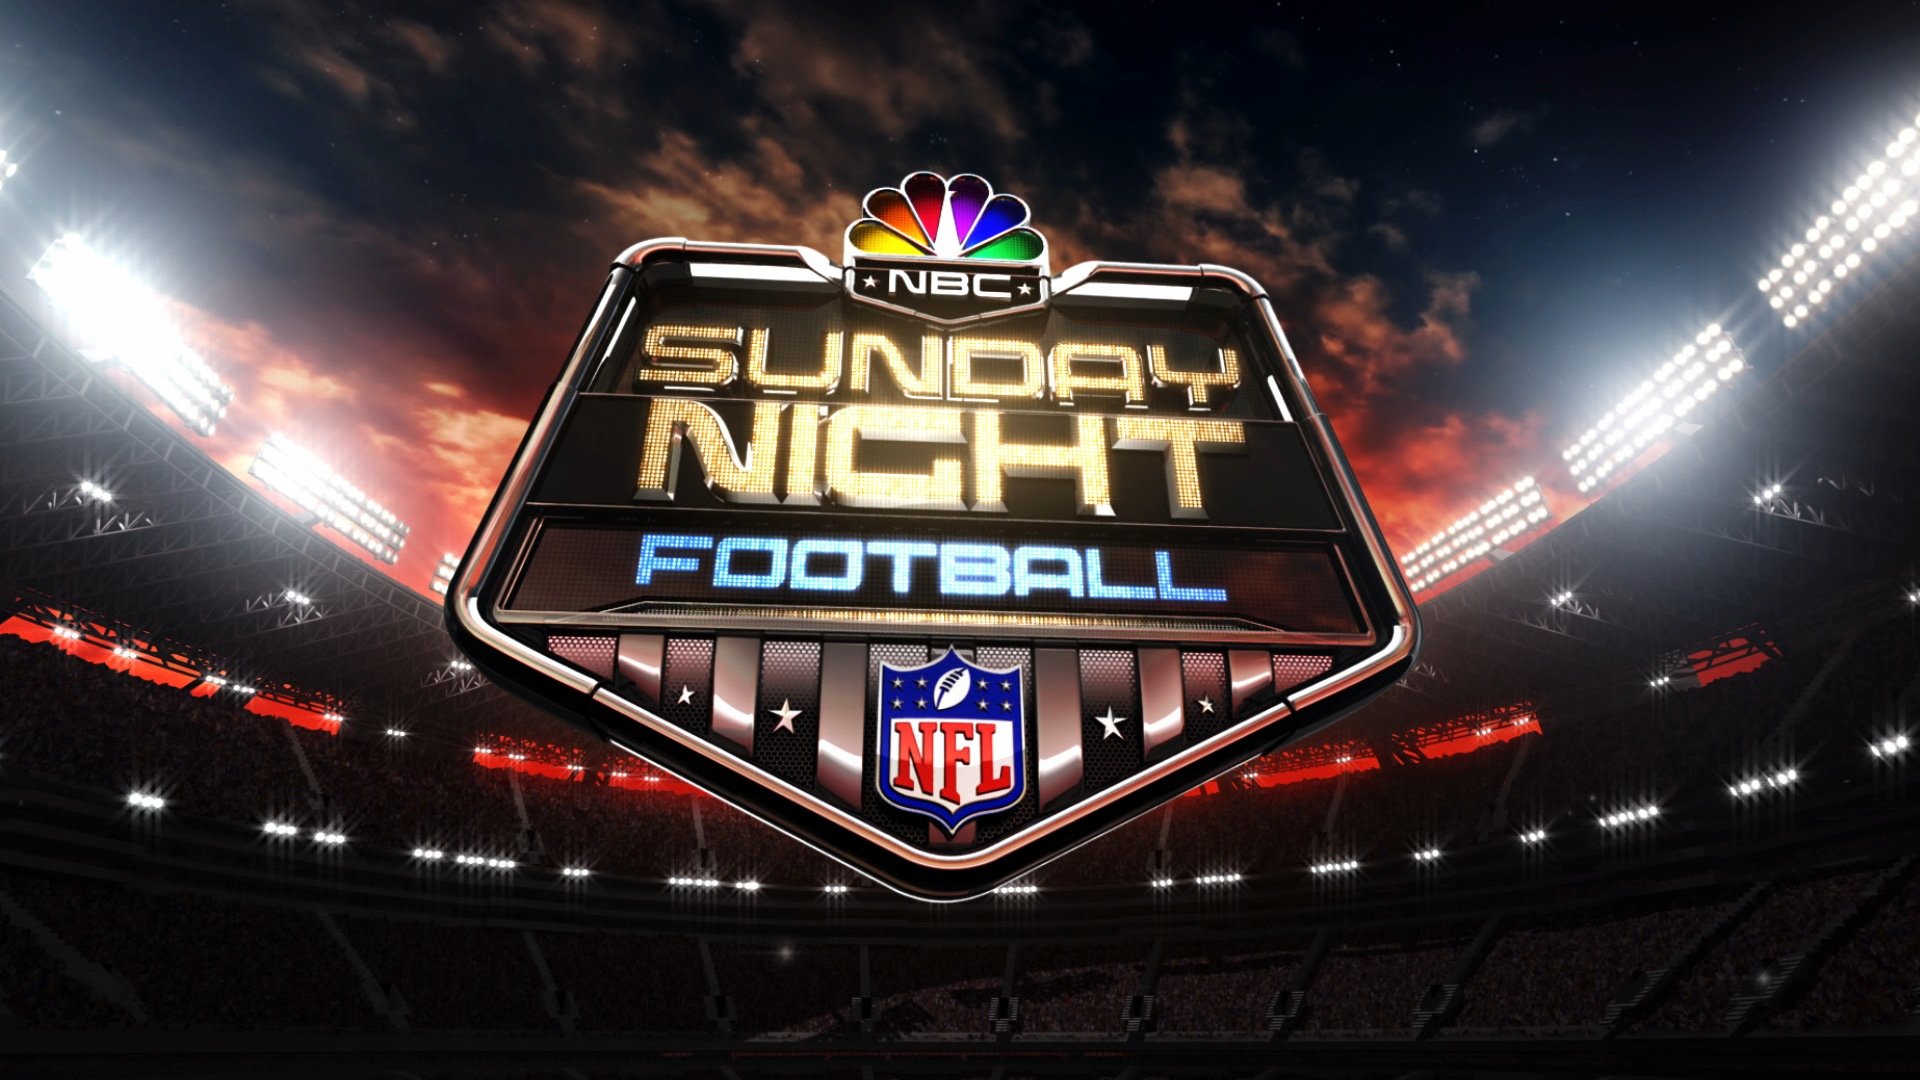 2014/2015 NFL Season Schedule Including Monday / Sunday Night Football